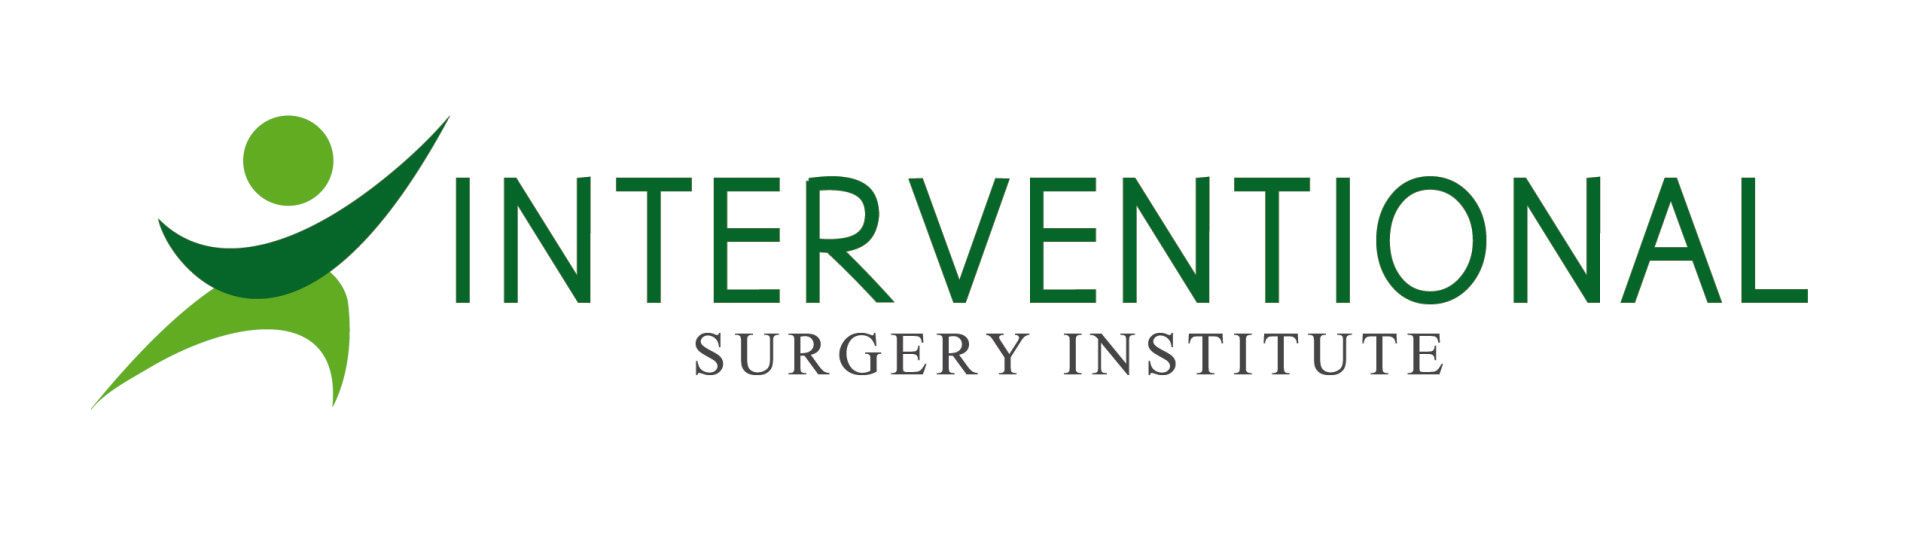 Little Rock Interventional Surgery Institute Logo